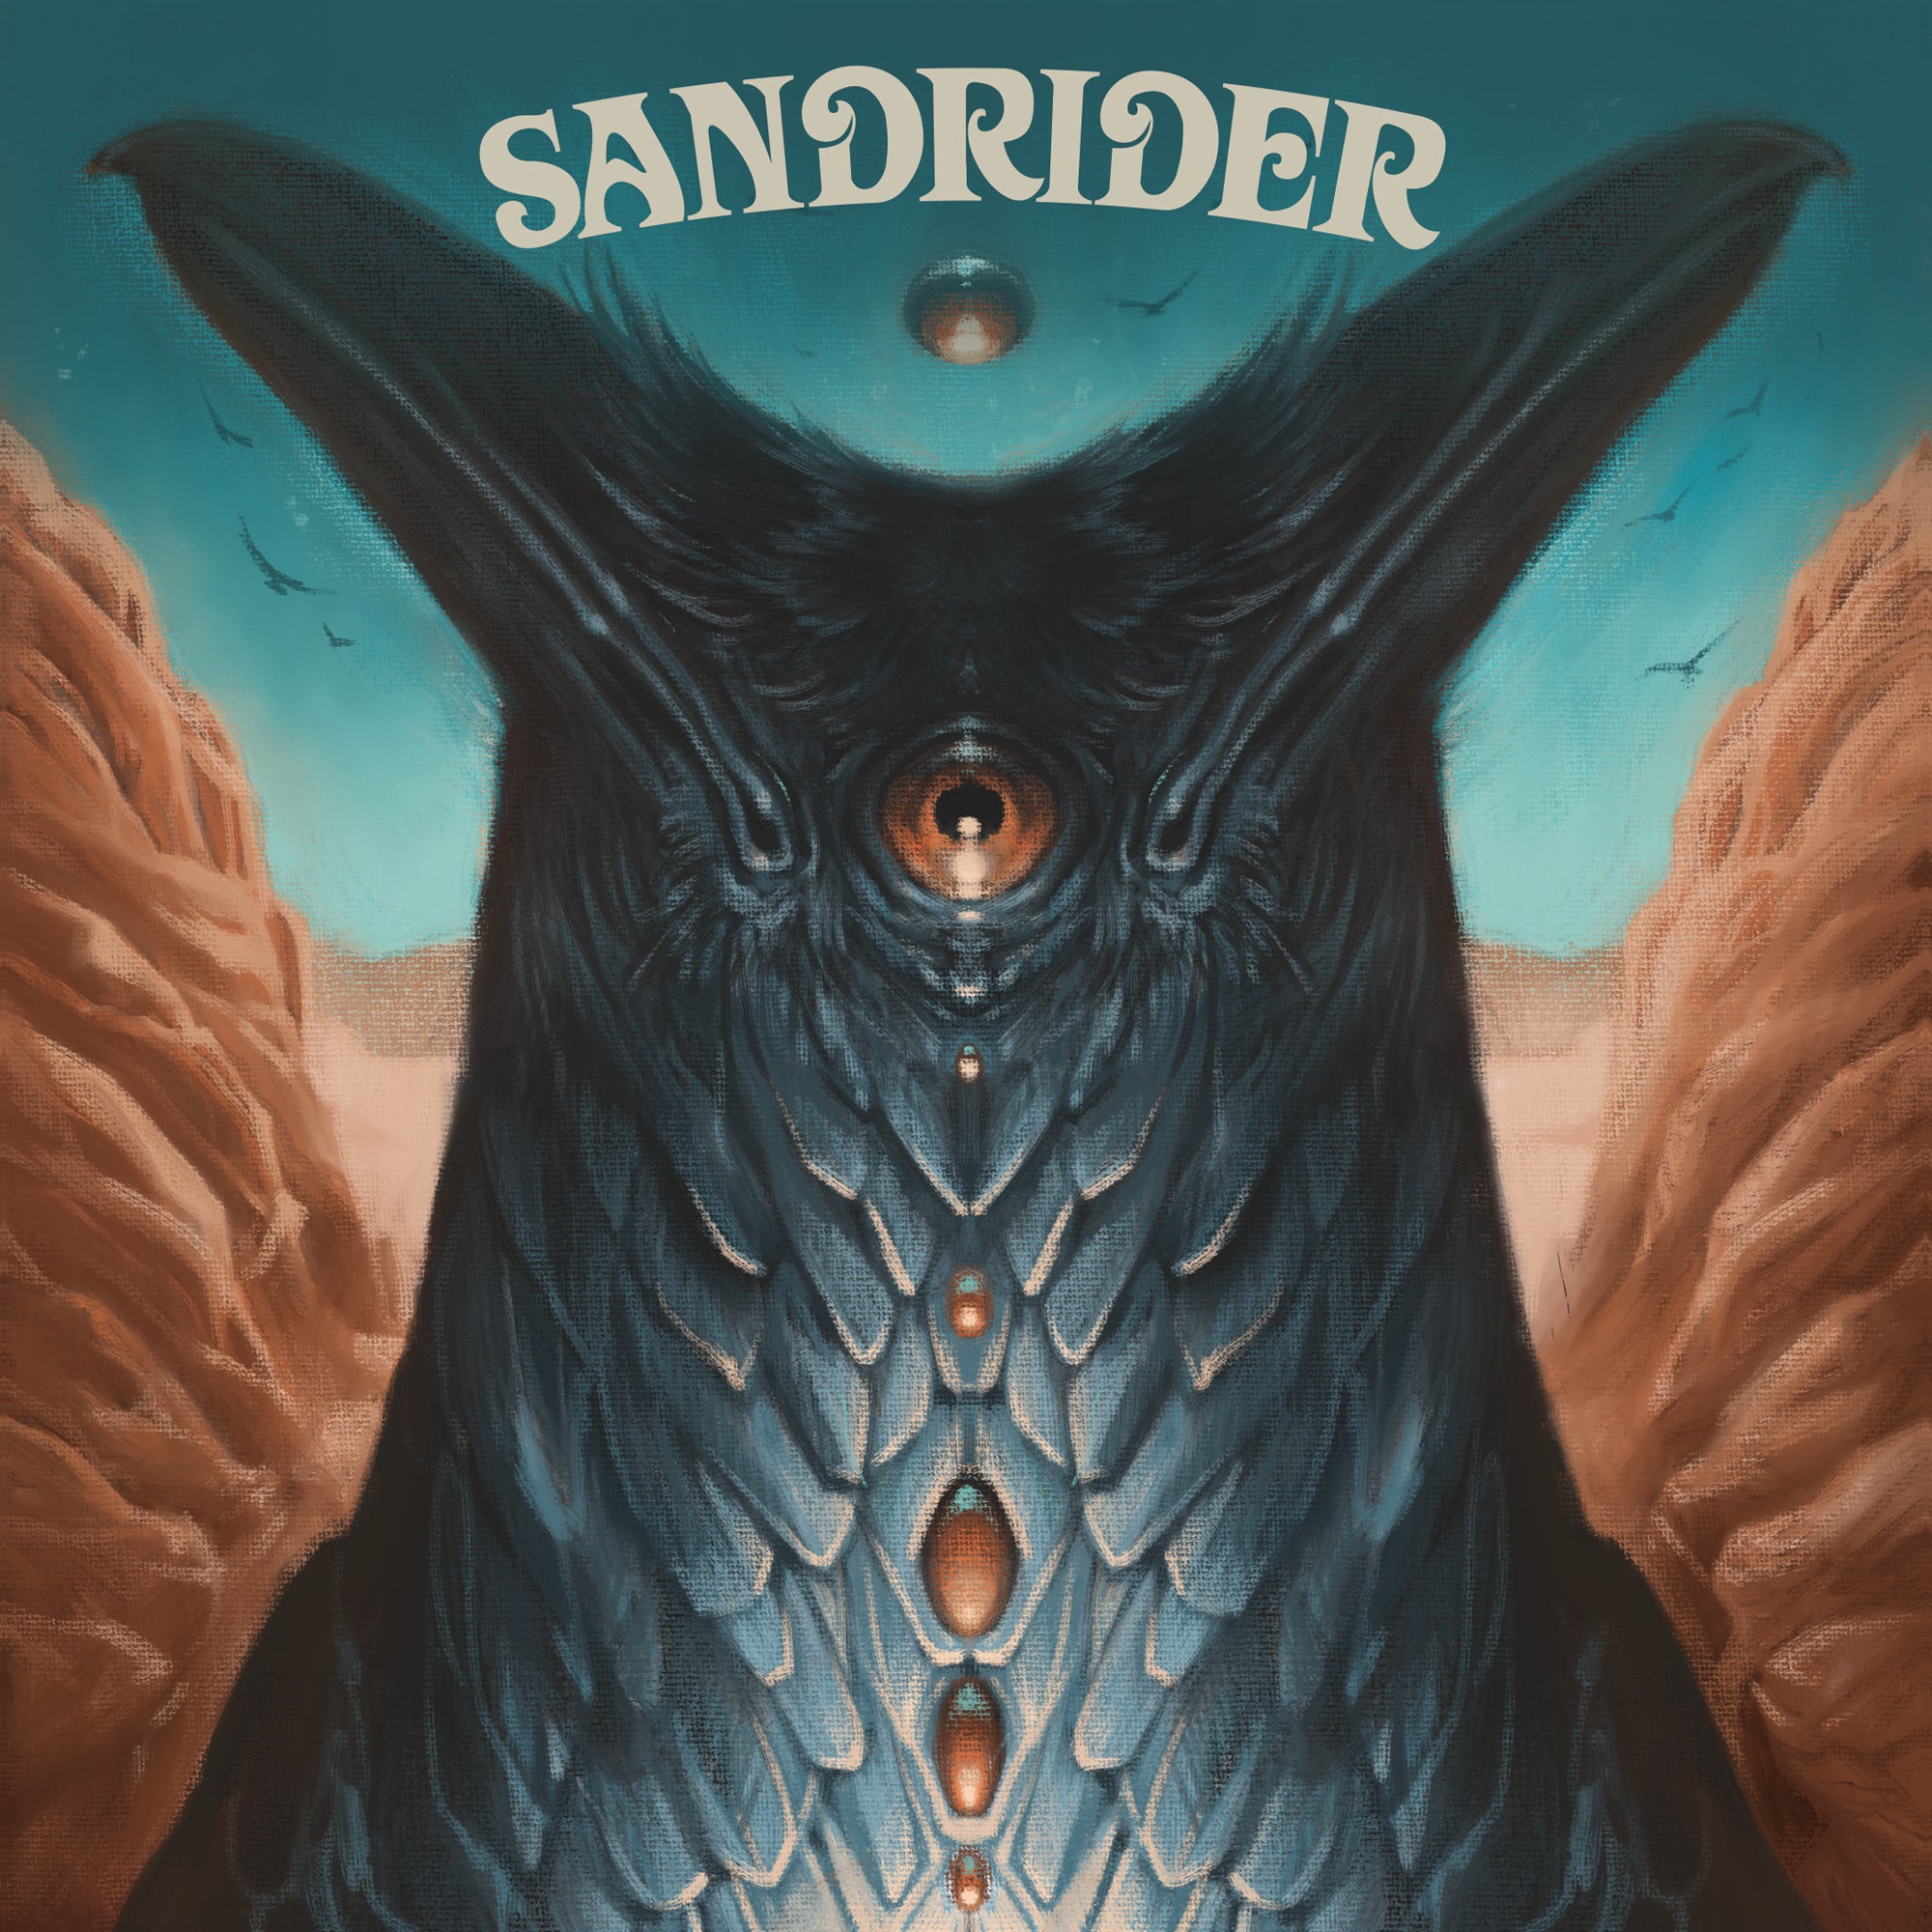 V517 - SANDRIDER - "Aviary & Baleen" 7"